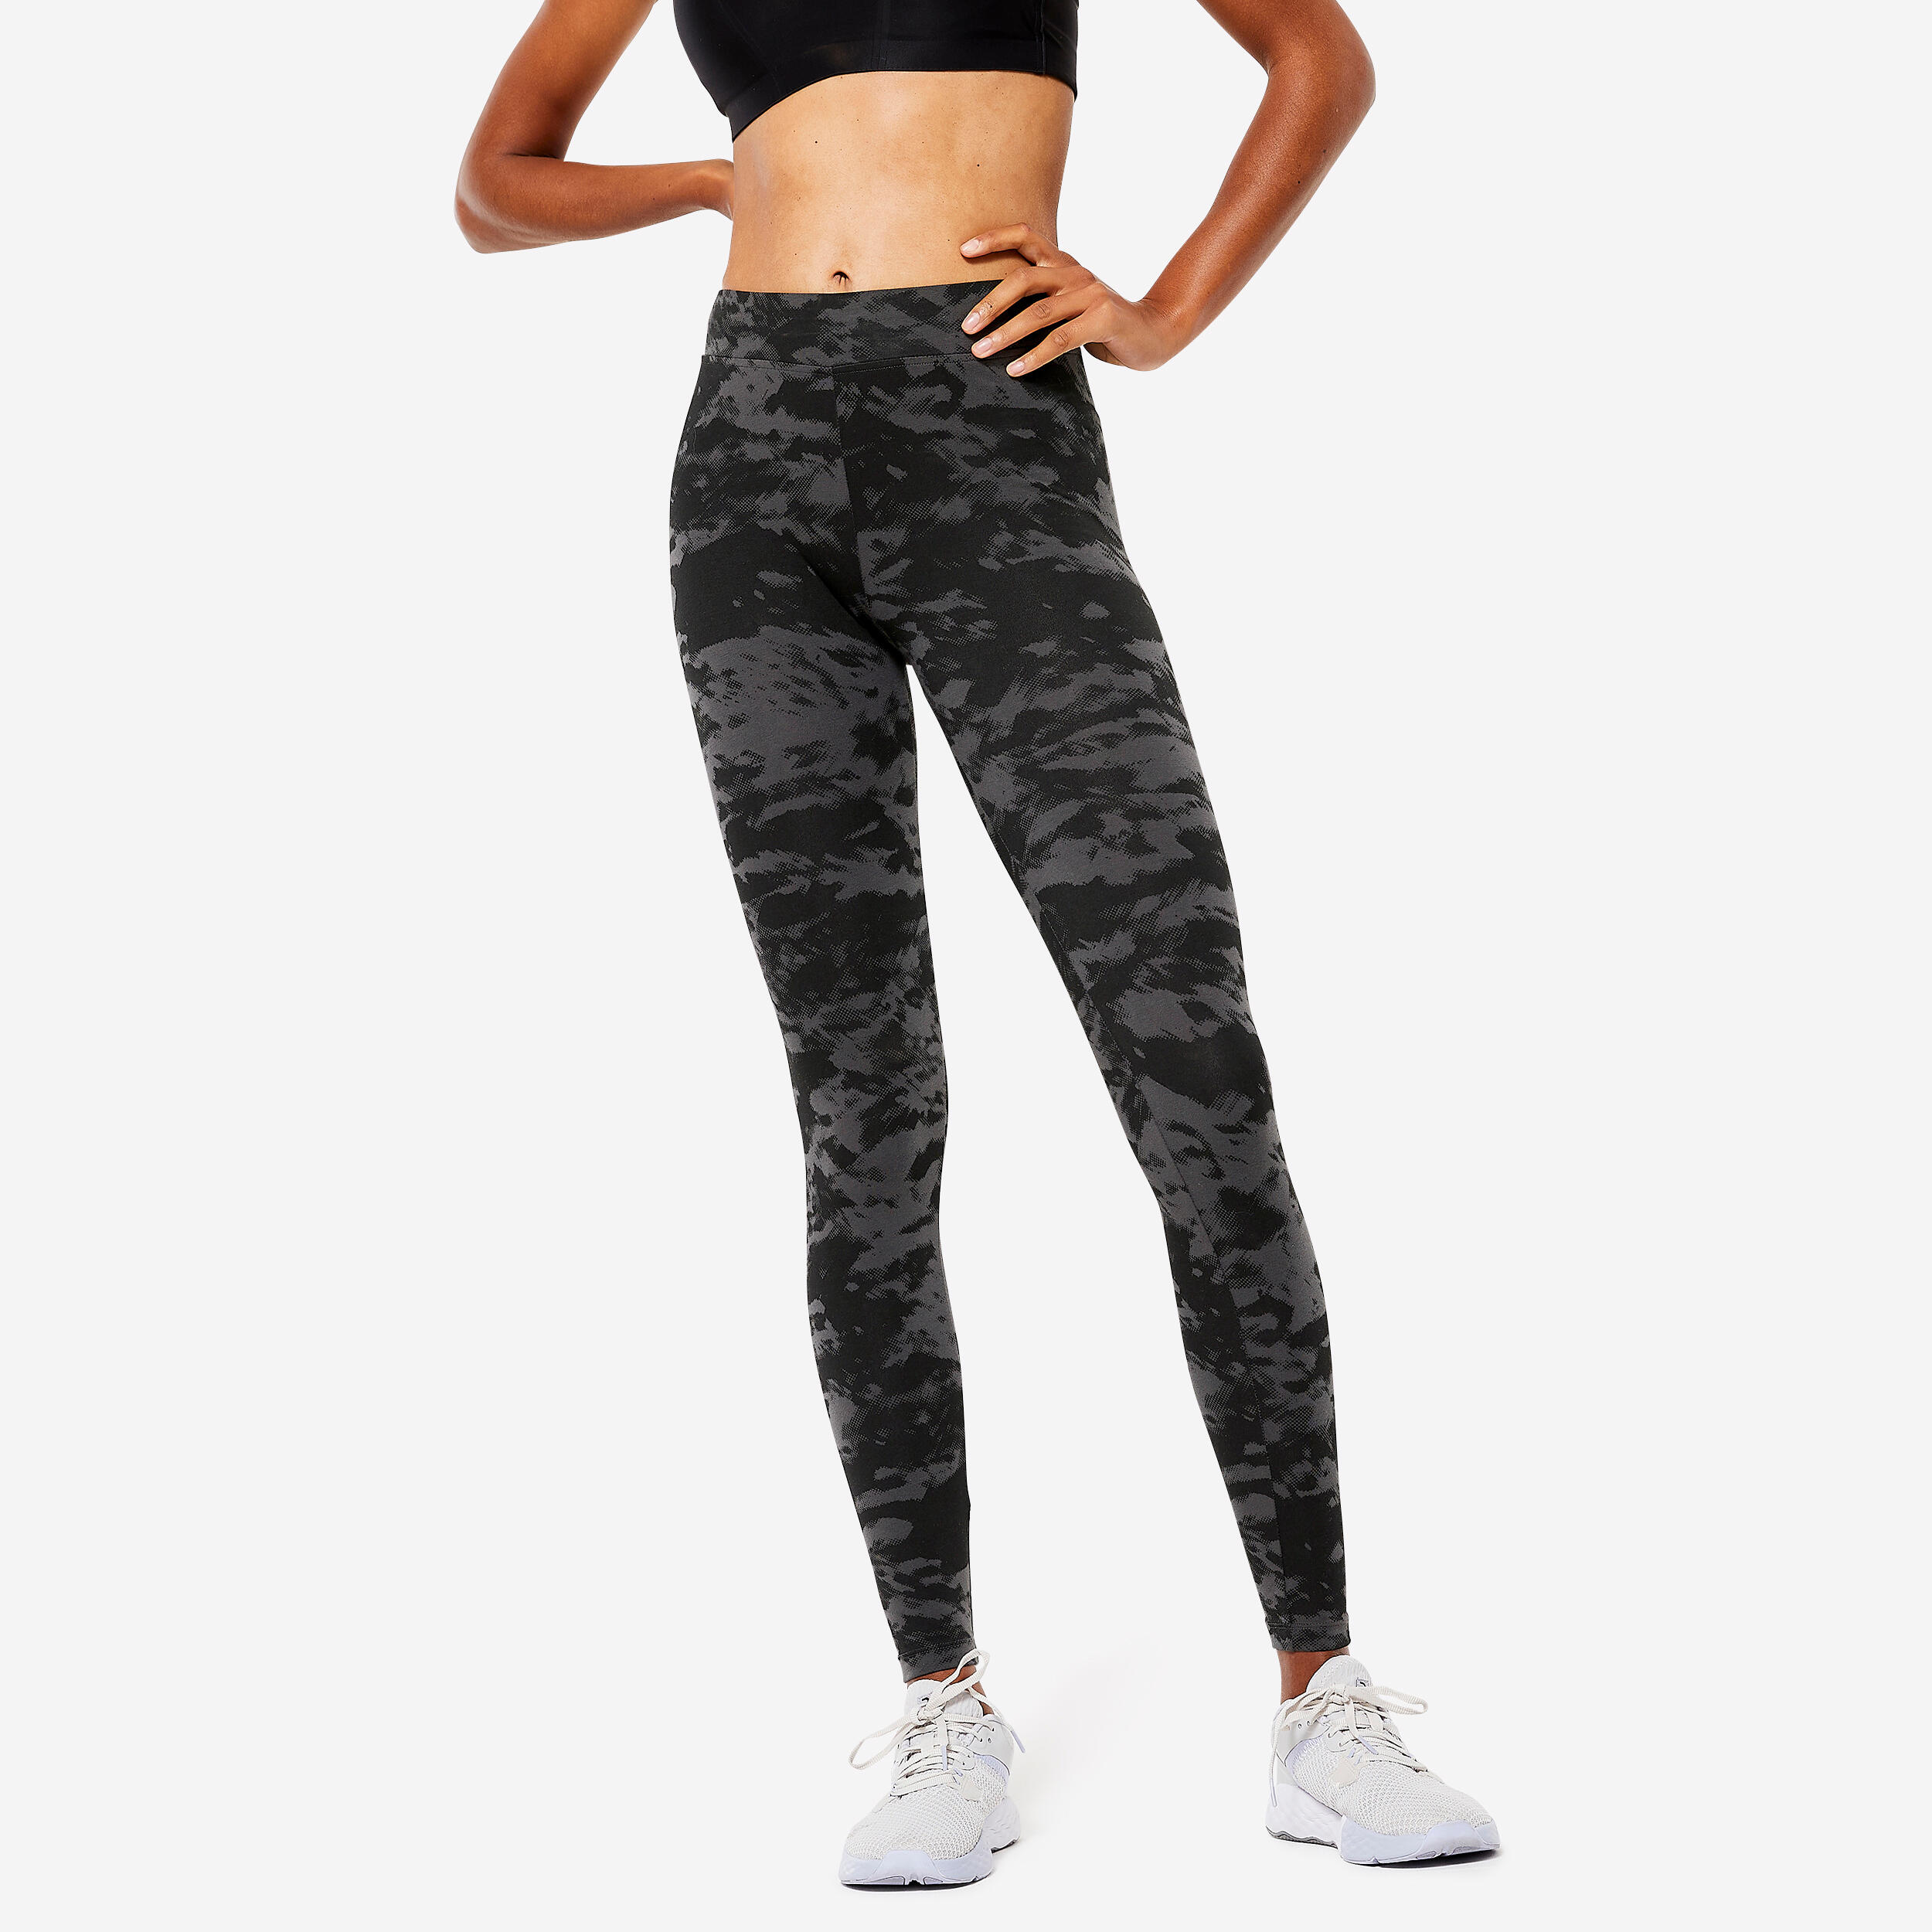 DOMYOS Women's Slim-Fit Fitness Leggings Fit+ 500 - Black Print